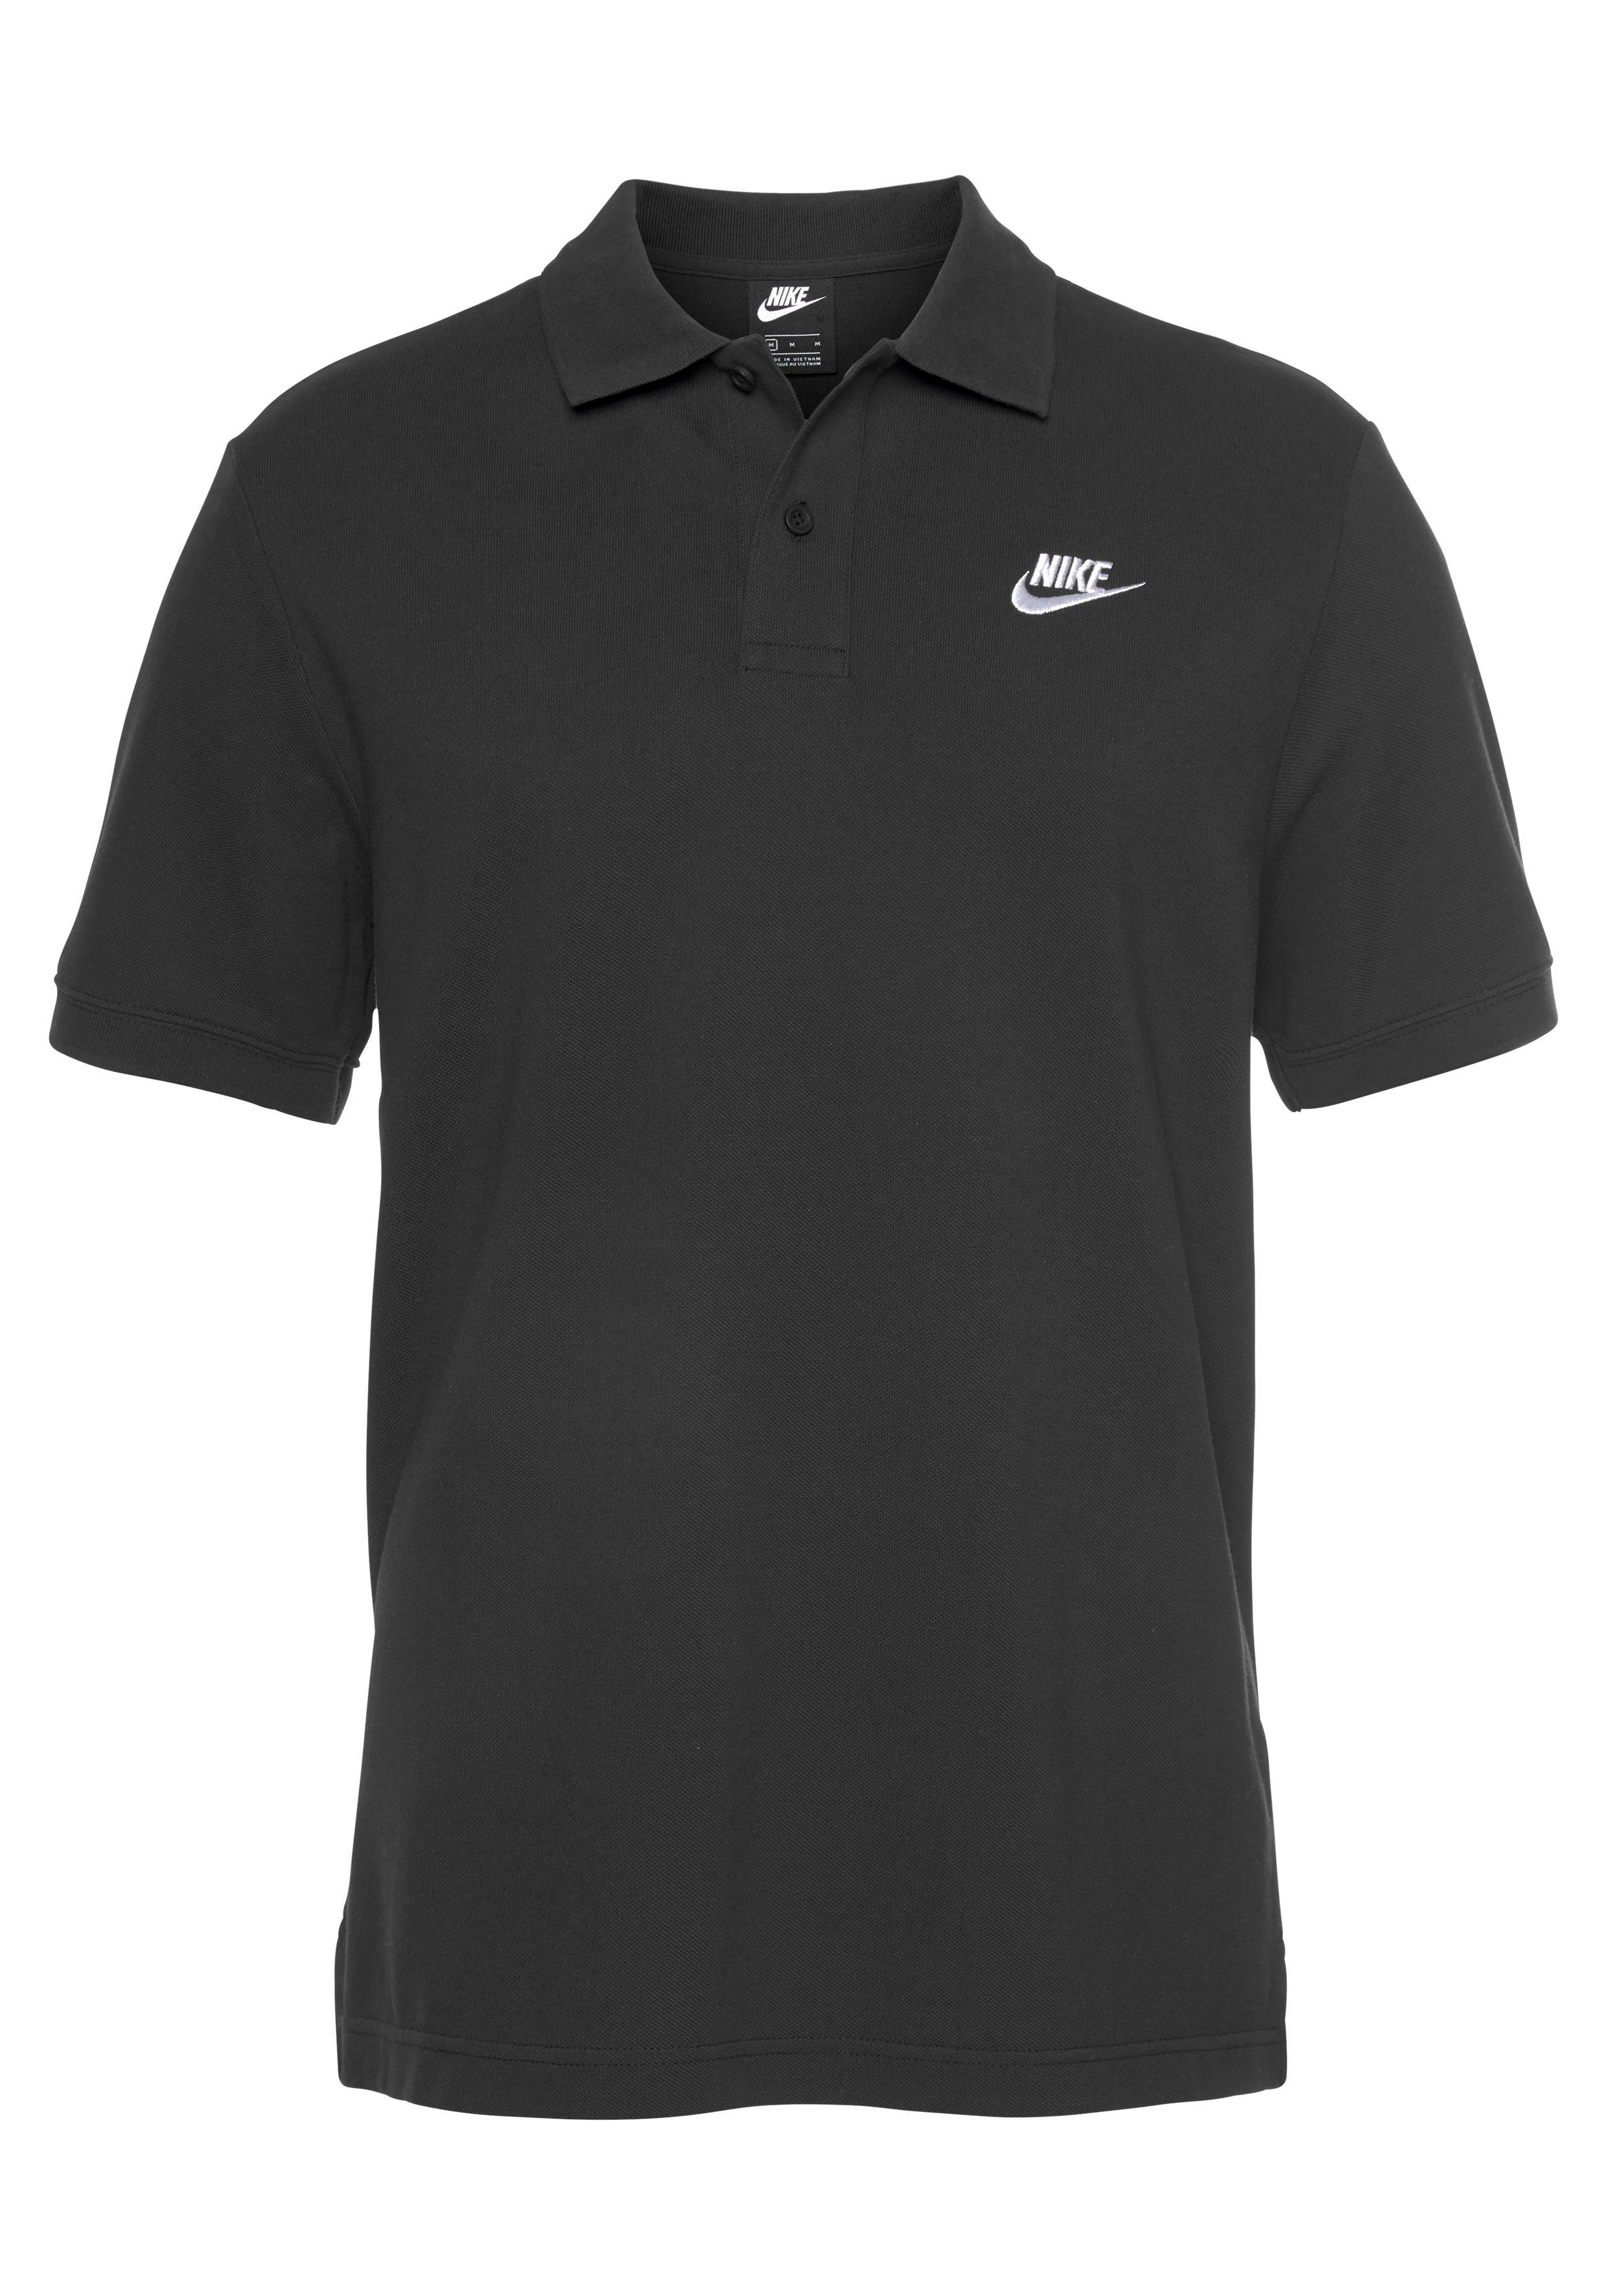 Men's schwarz Nike Sportswear Poloshirt Polo